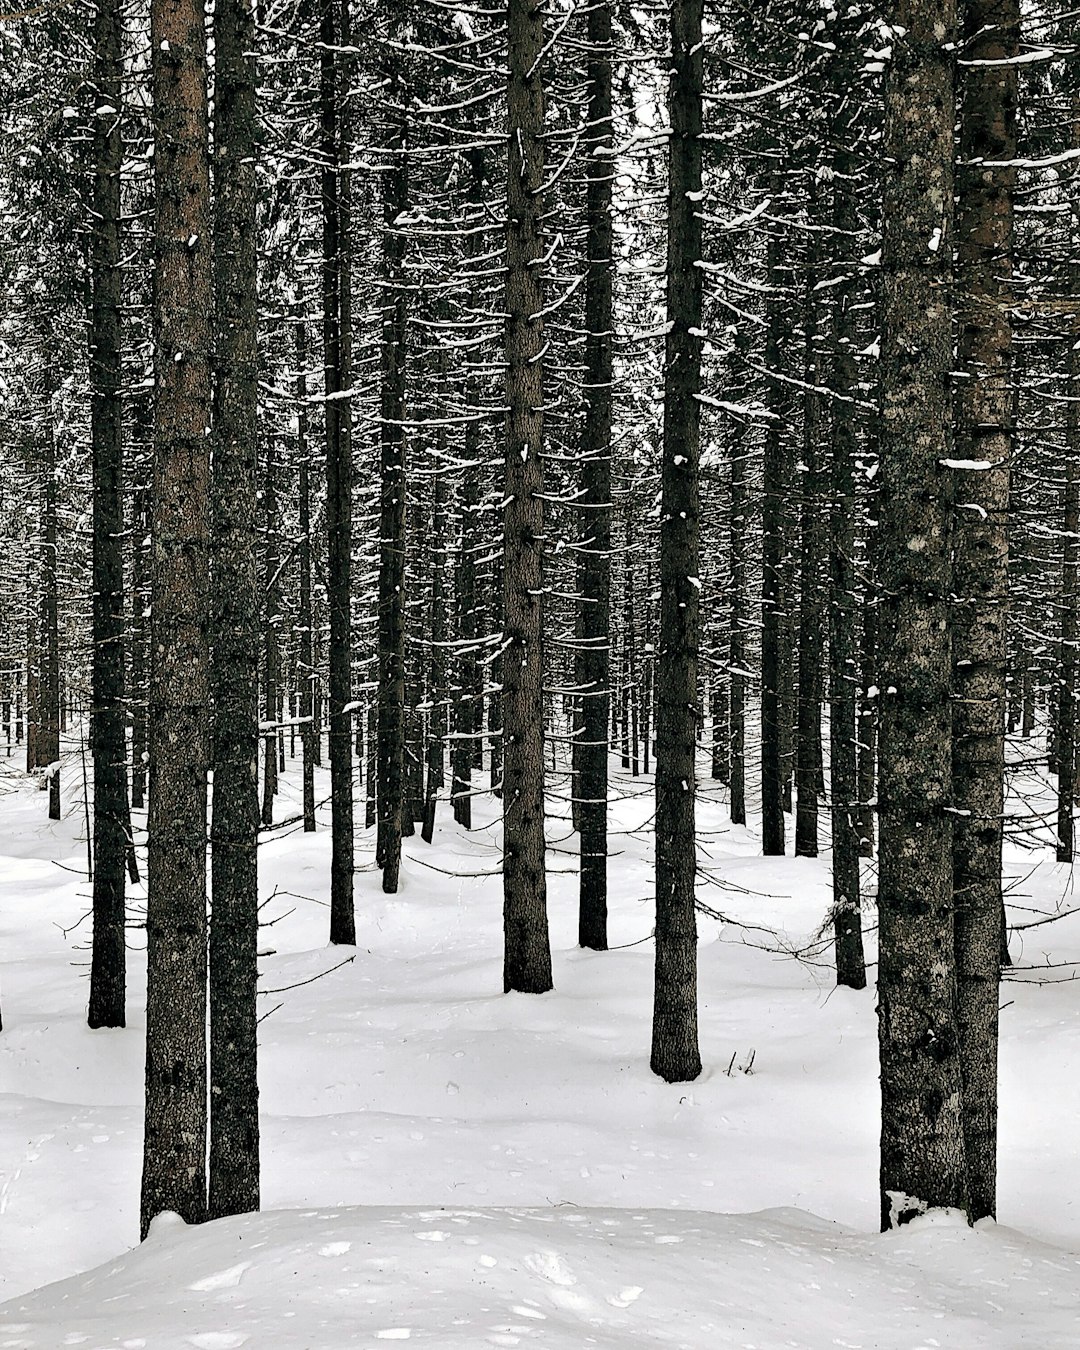 Spruce-fir forest photo spot Paneveggio - Pale di San Martino Pragser Wildsee